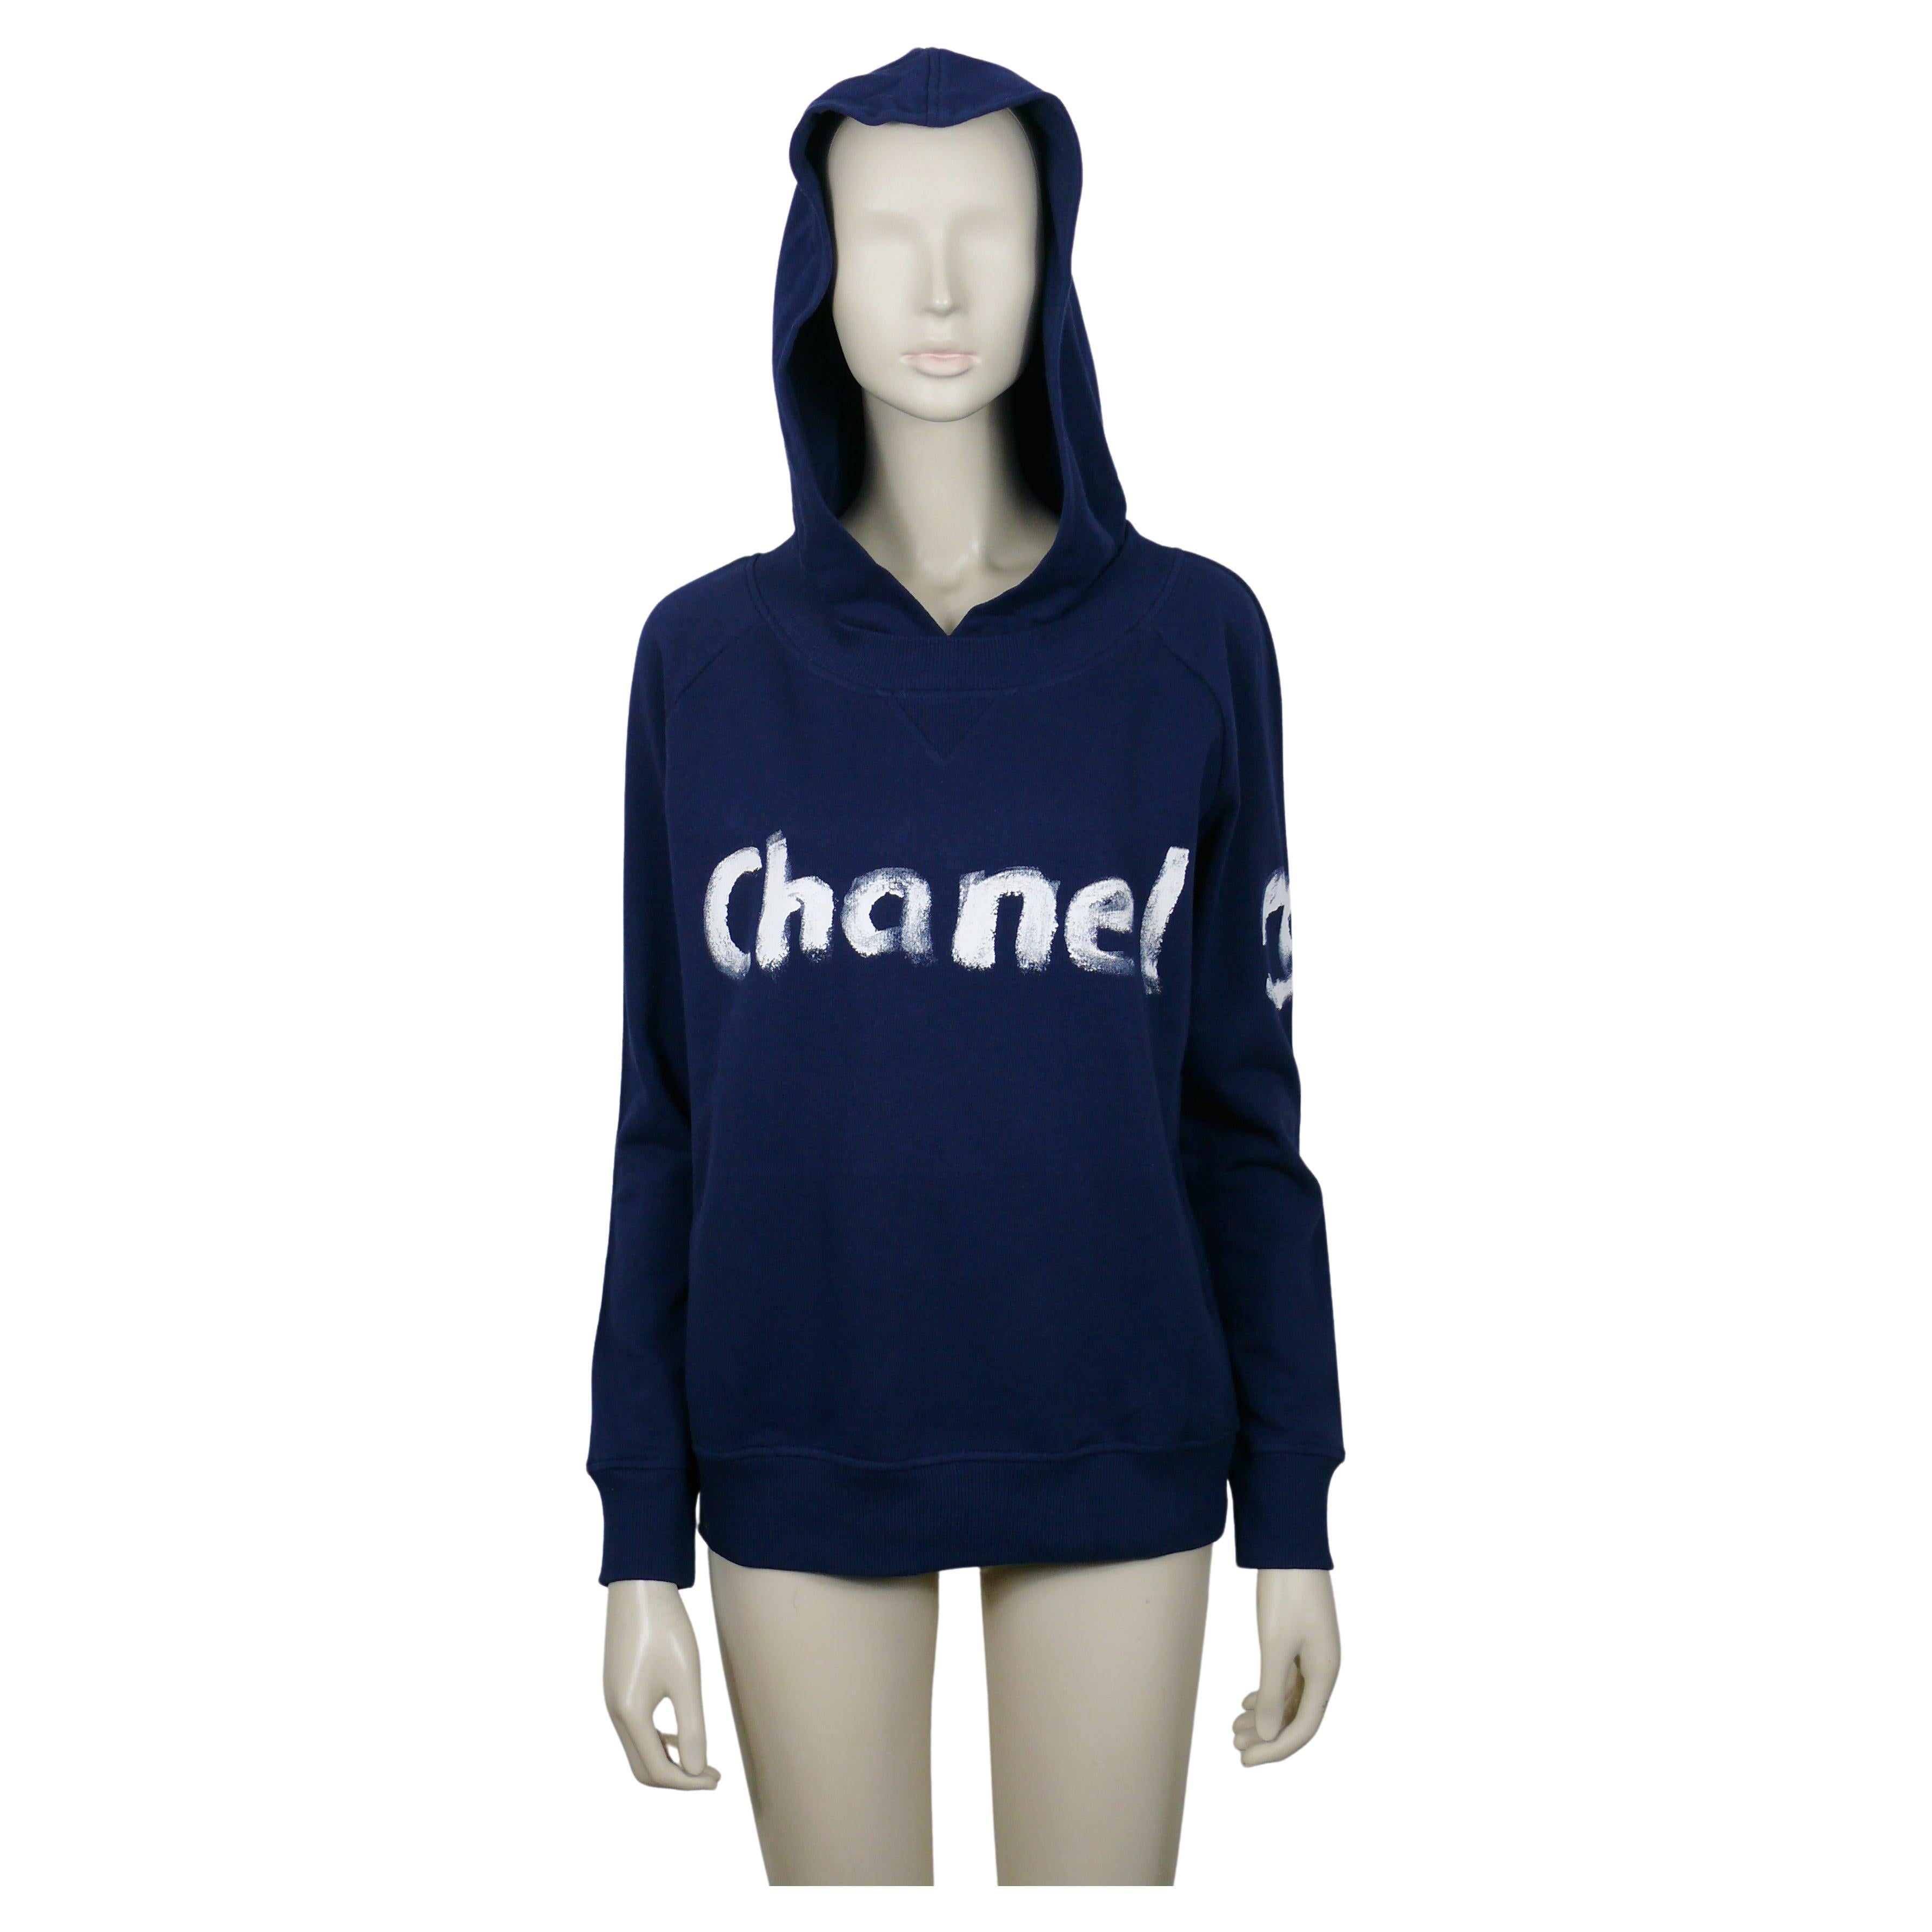 Chanel Cc Sweatshirt - 3 For Sale on 1stDibs  chanel sweater for men,  men's chanel sweater, chanel sweater men